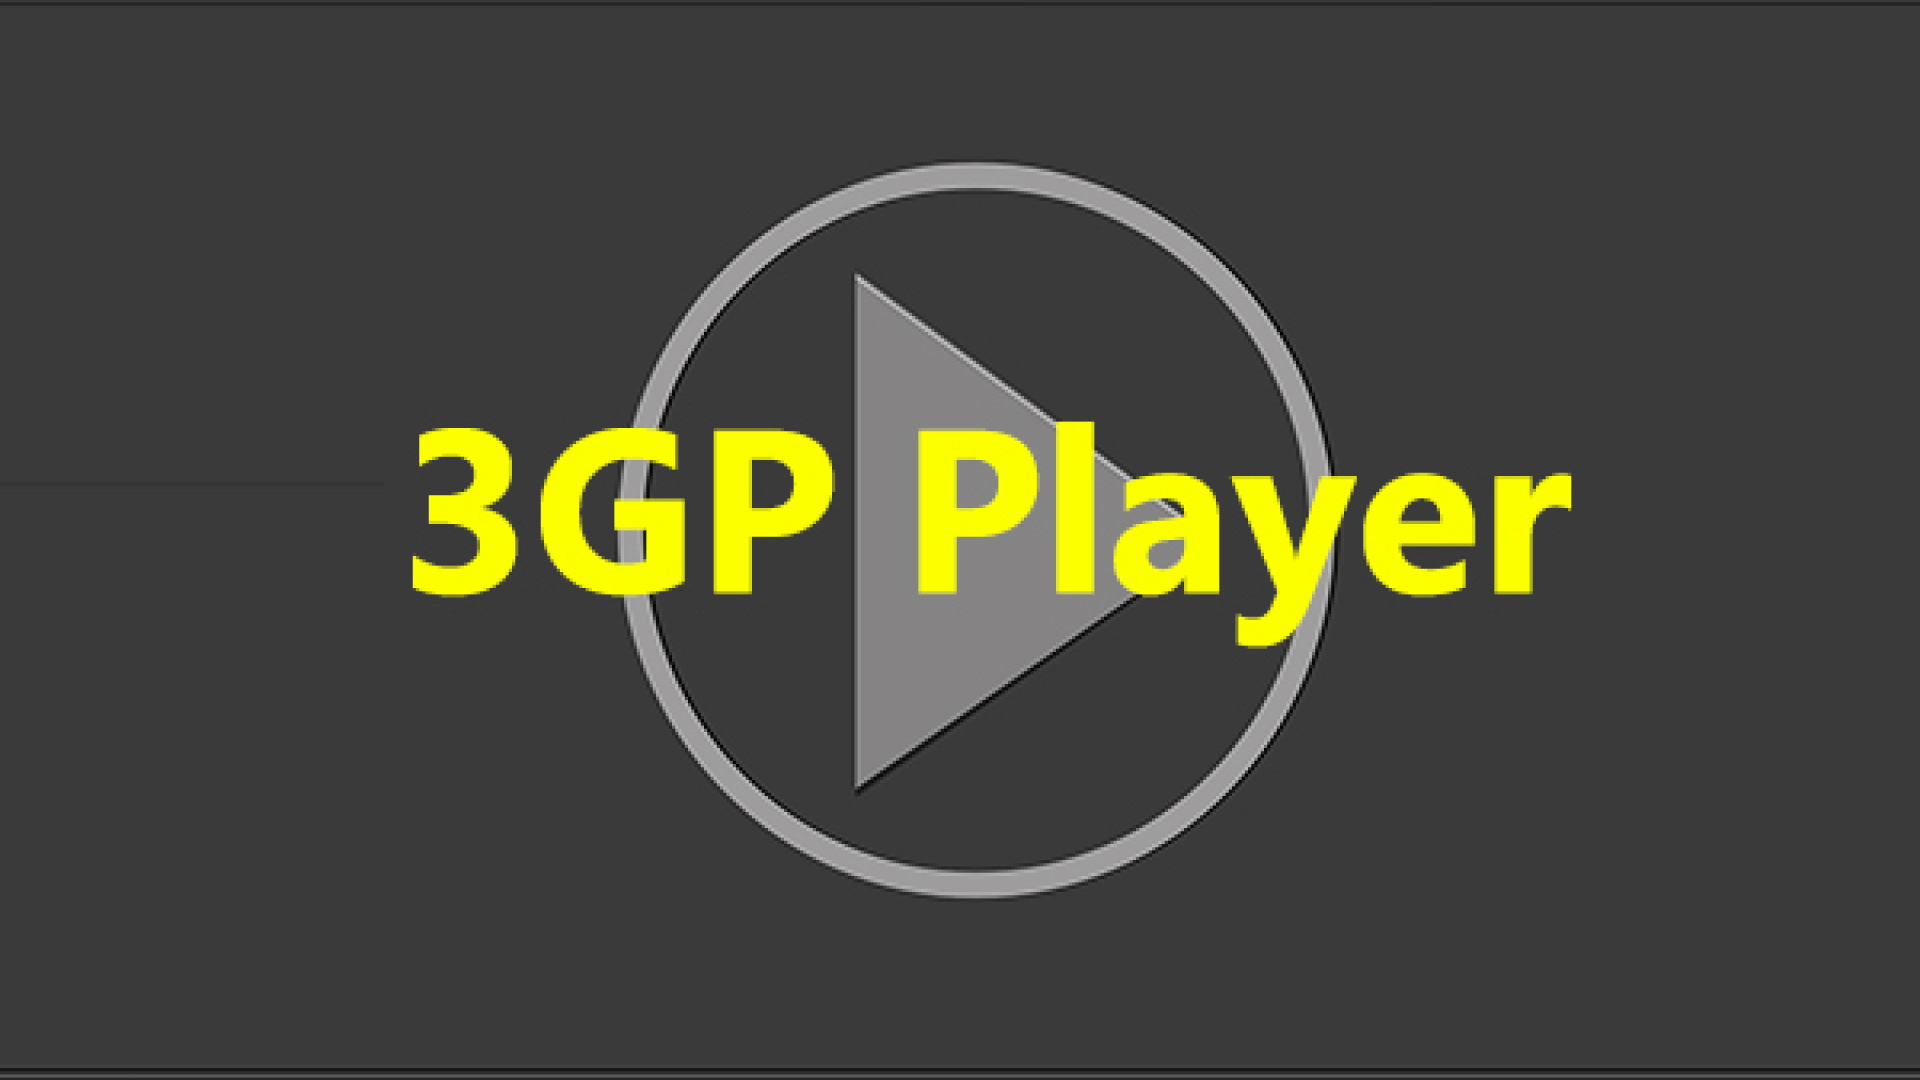 10 3GP Players for Windows 10 to Play 3GP